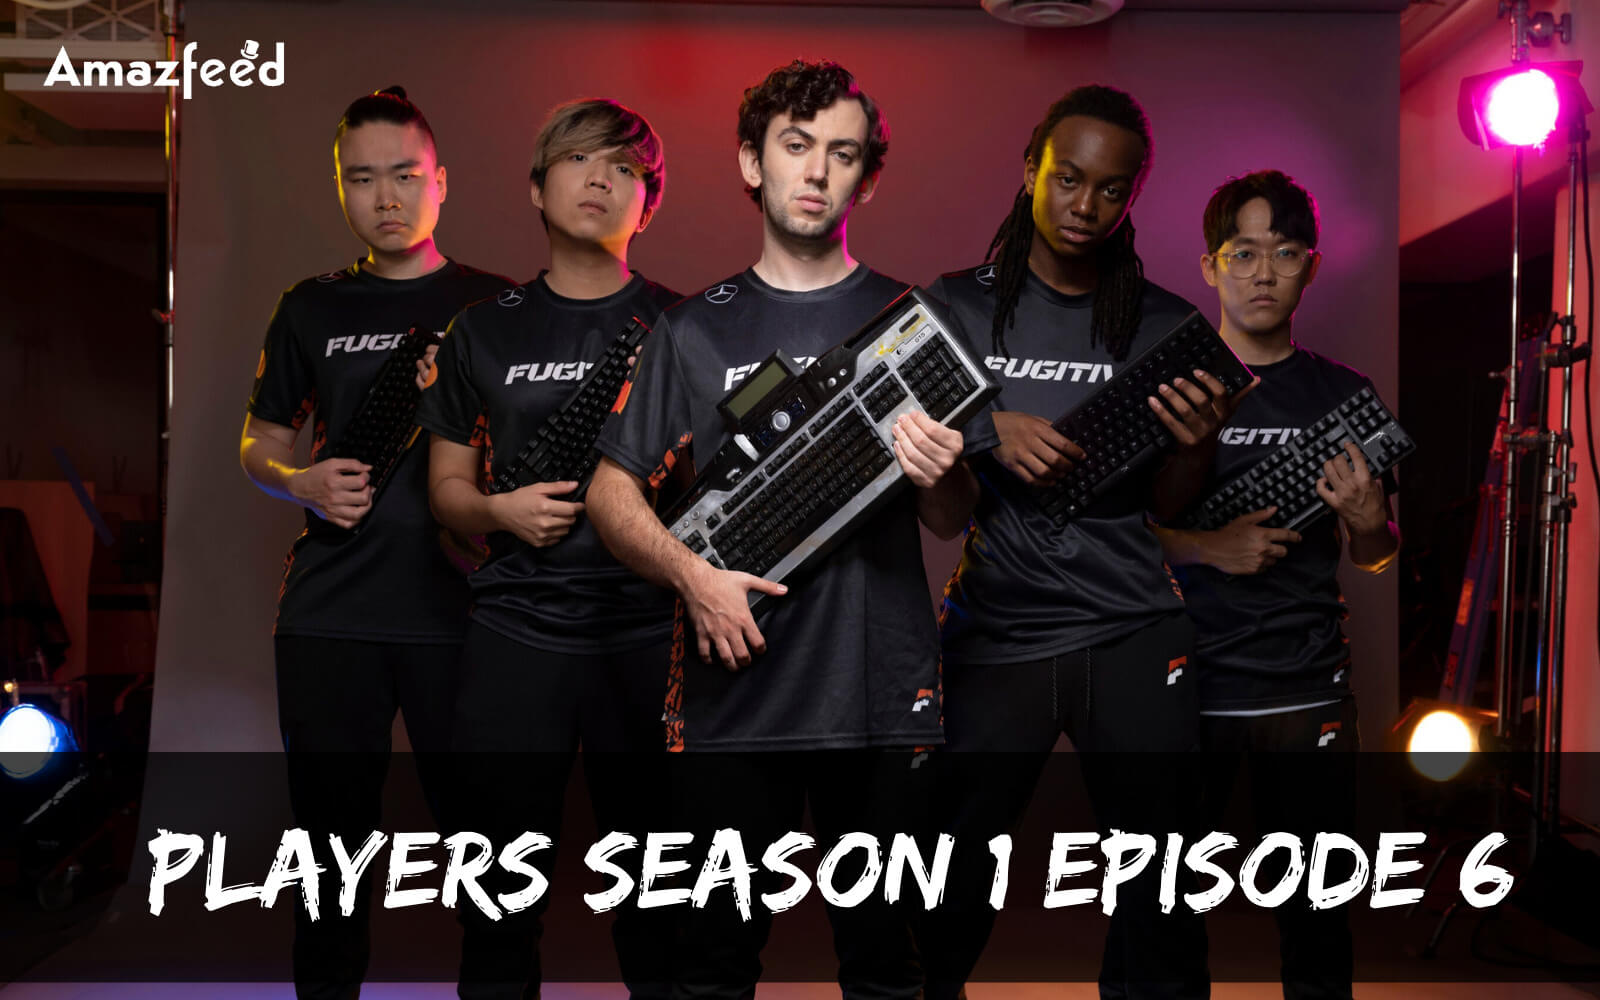 Players Season 1 Episode 6 release date